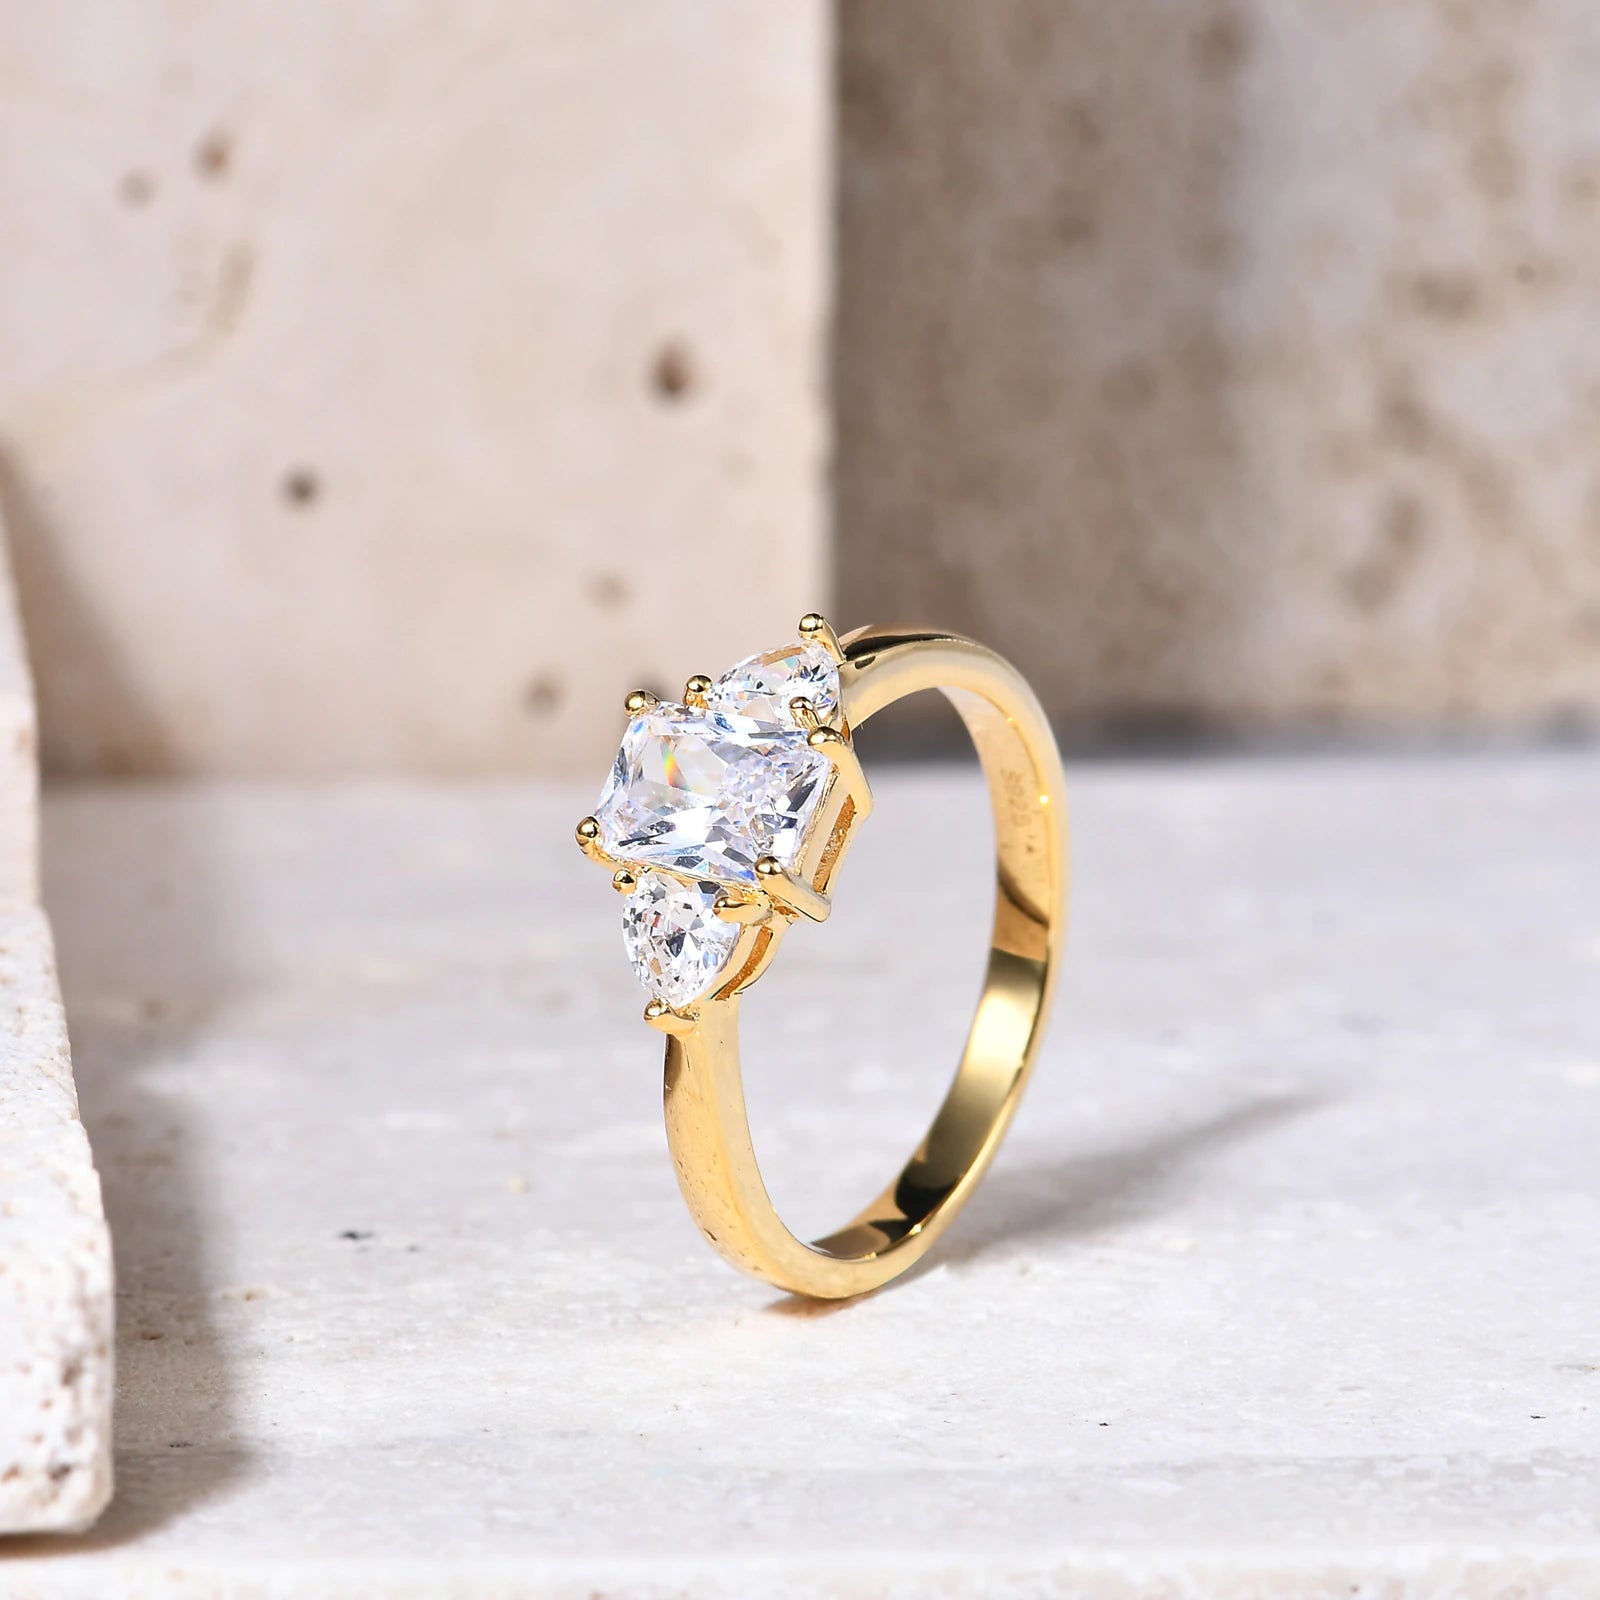 Prince Harry Designed Meghan Markle's Engagement Ring